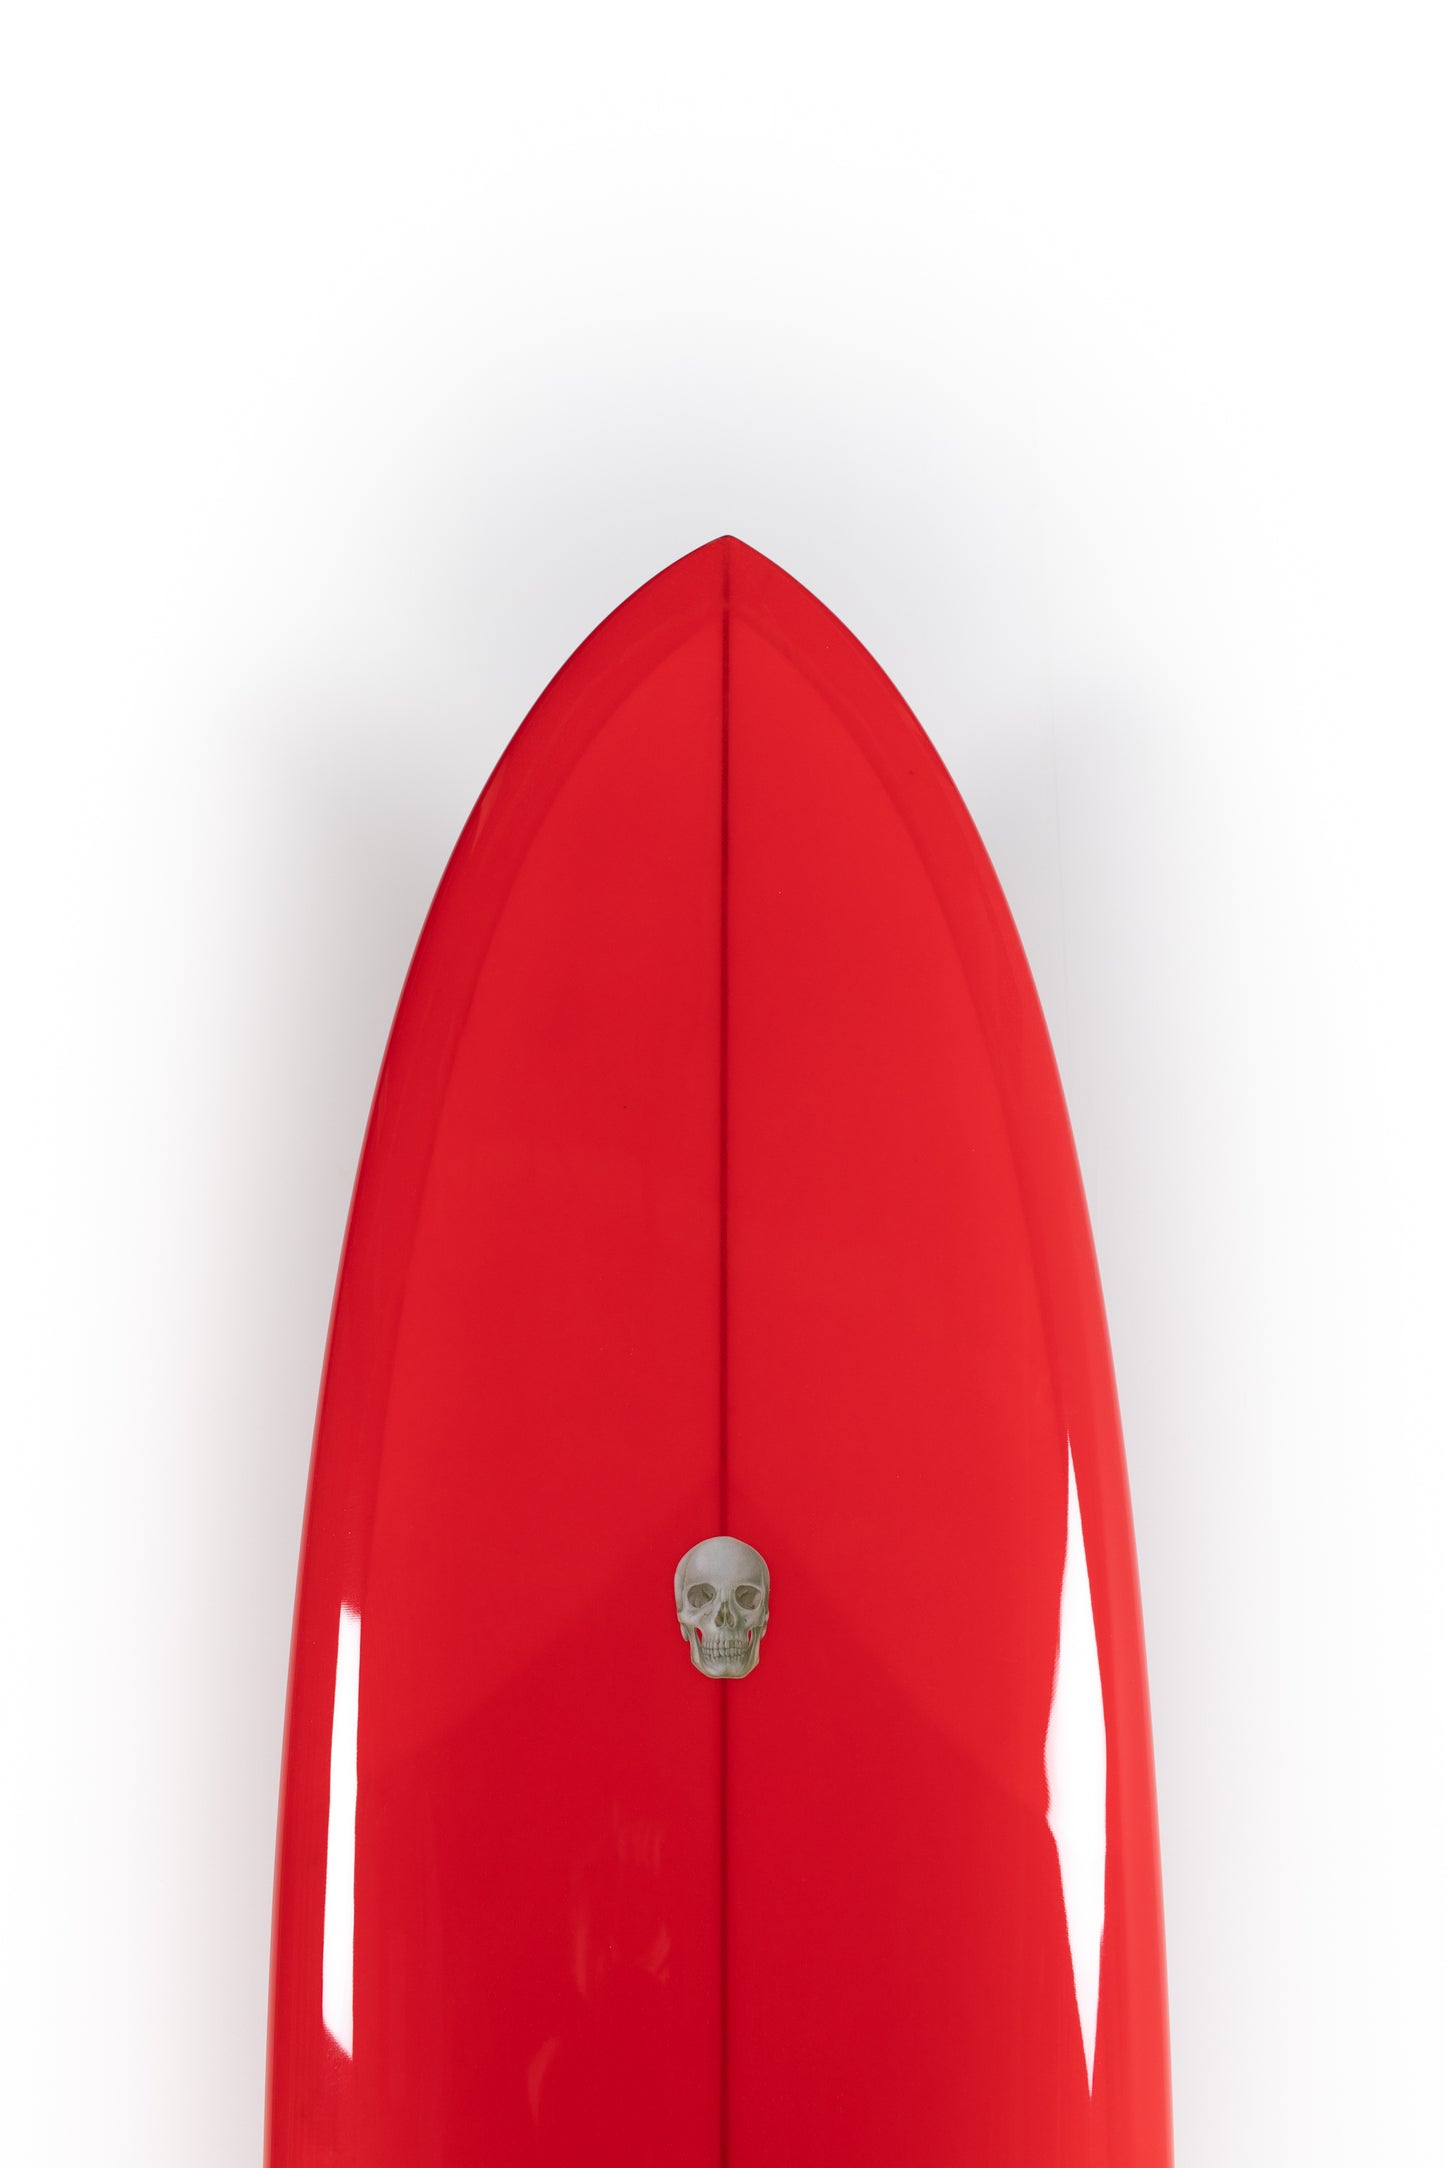 
                  
                    Pukas Surf Shop - Christenson Surfboards - C-BUCKET - 7'6" x 21 1/4 x 2 3/4 - CX04677
                  
                